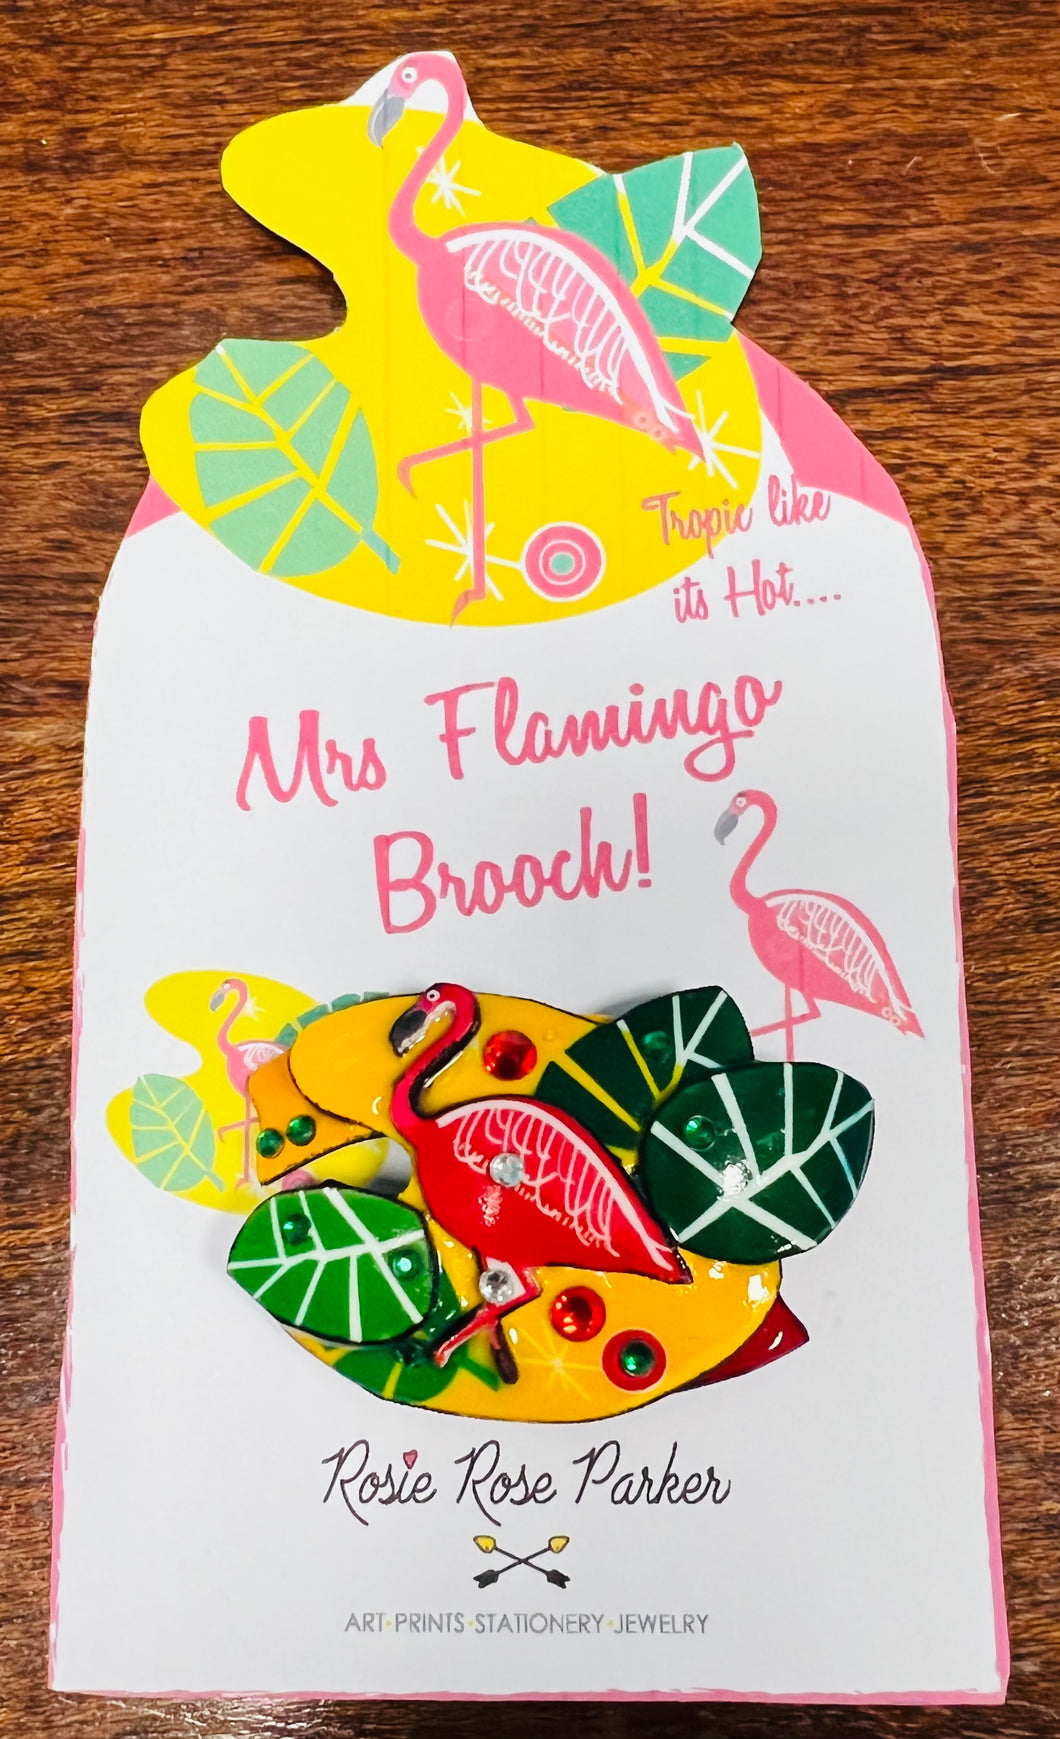 Broitch Mrs Flamingo Kitsch / Kitsch Mrs Flamingo brooch